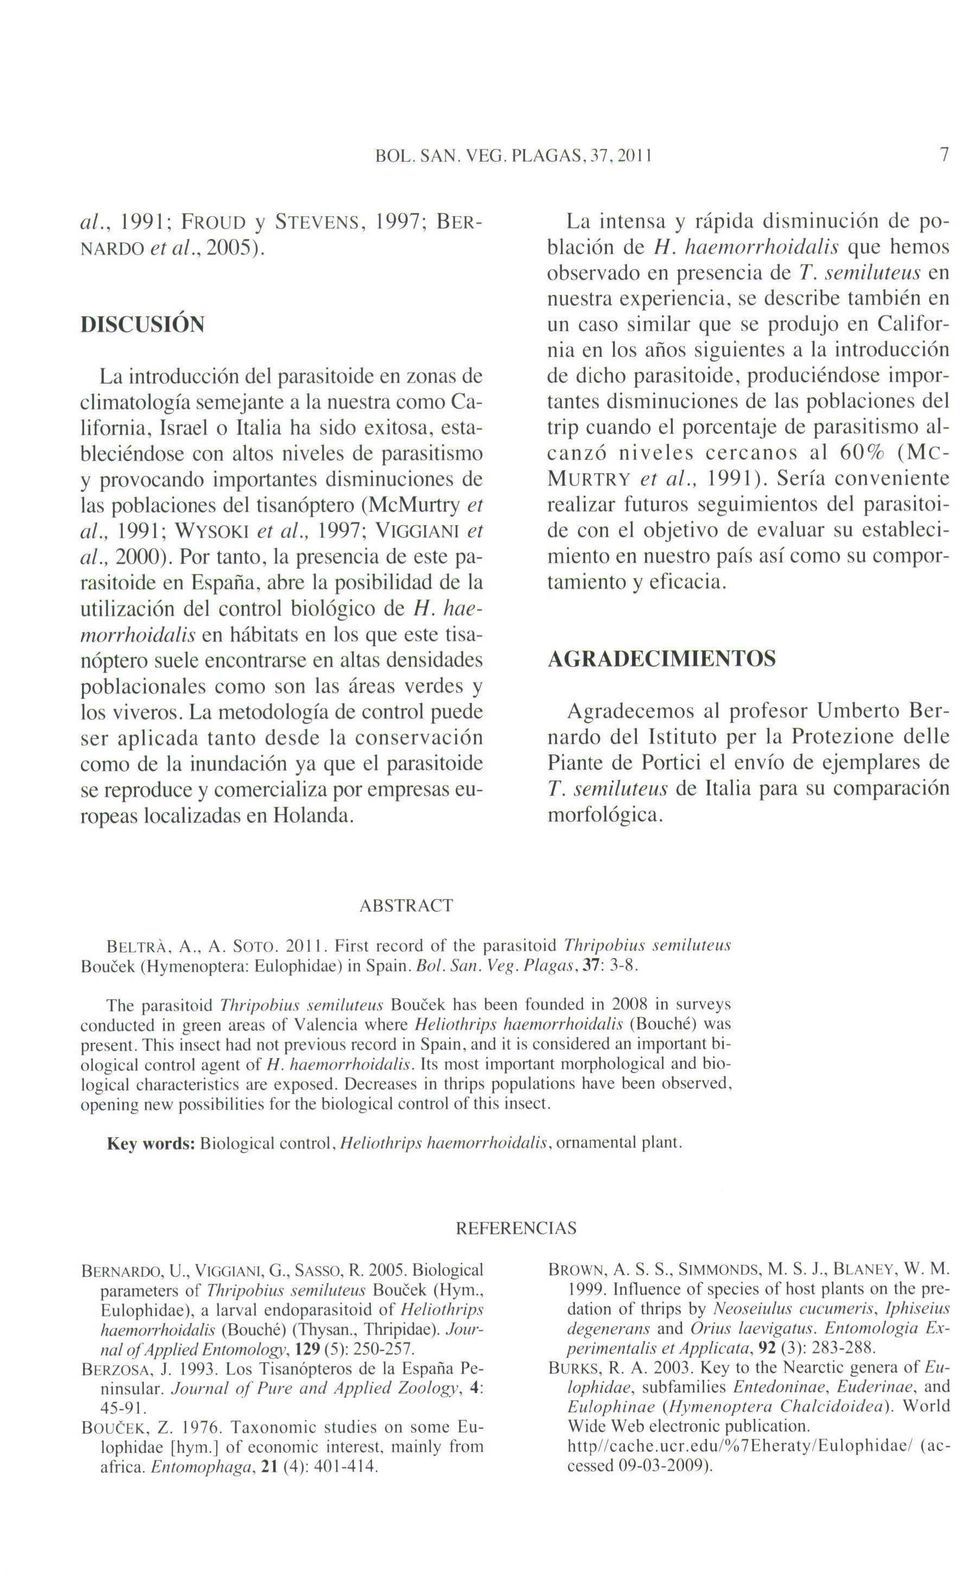 provocando importantes disminuciones de las poblaciones del tisanóptero (McMurtry et al., 1991; WYSOKI eta!., 1997; VIGGIANI et al., 2000).